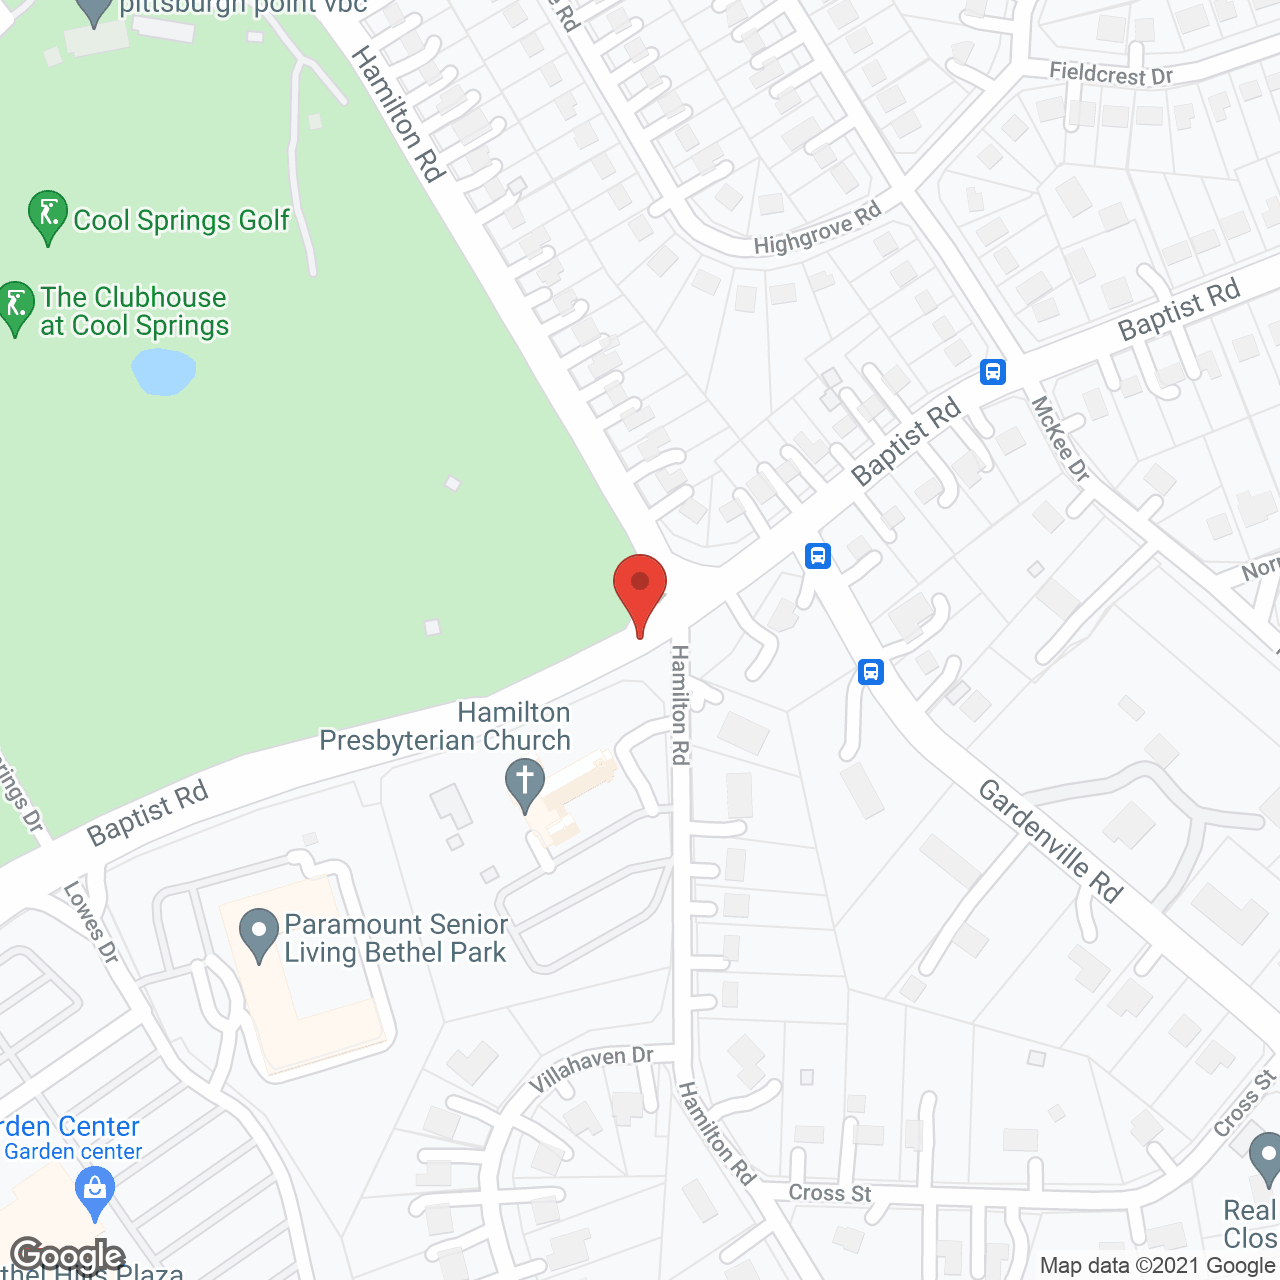 Paramount Senior Living at Bethel Park in google map